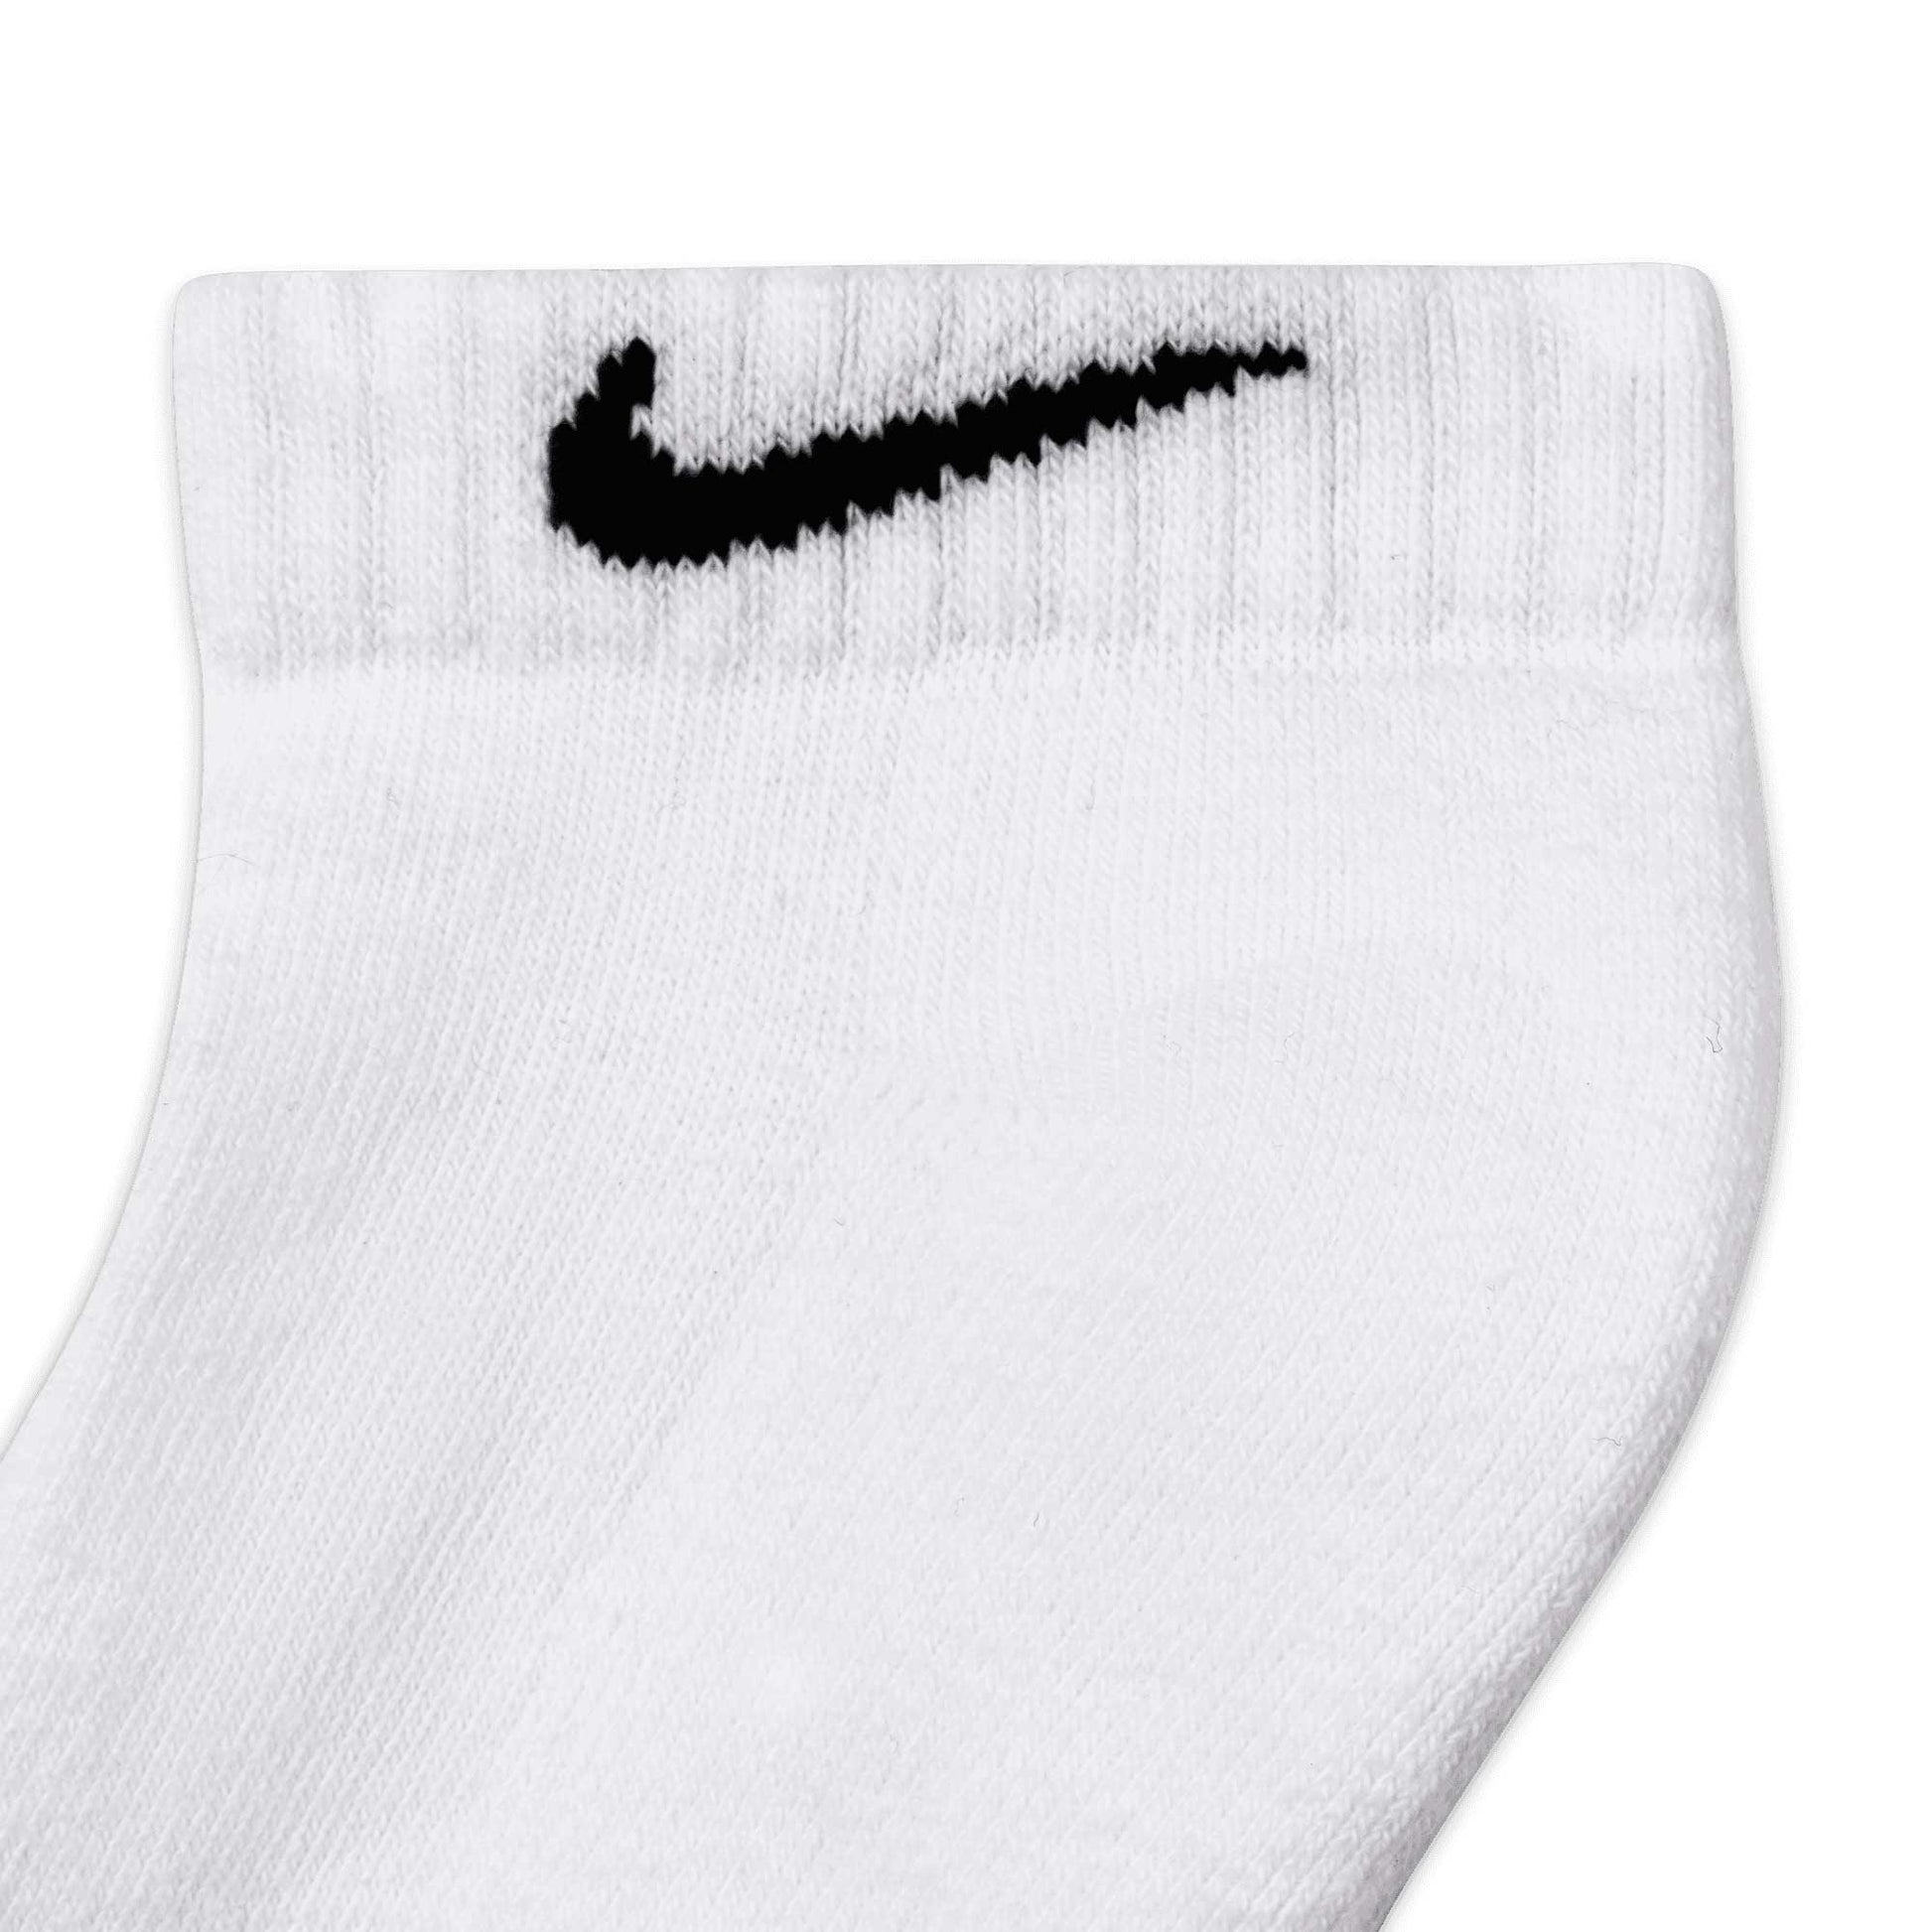 Nike SB Nike Everyday Cushioned Socks (3-Pack), white/black, white/black - Tiki Room Skateboards - 5